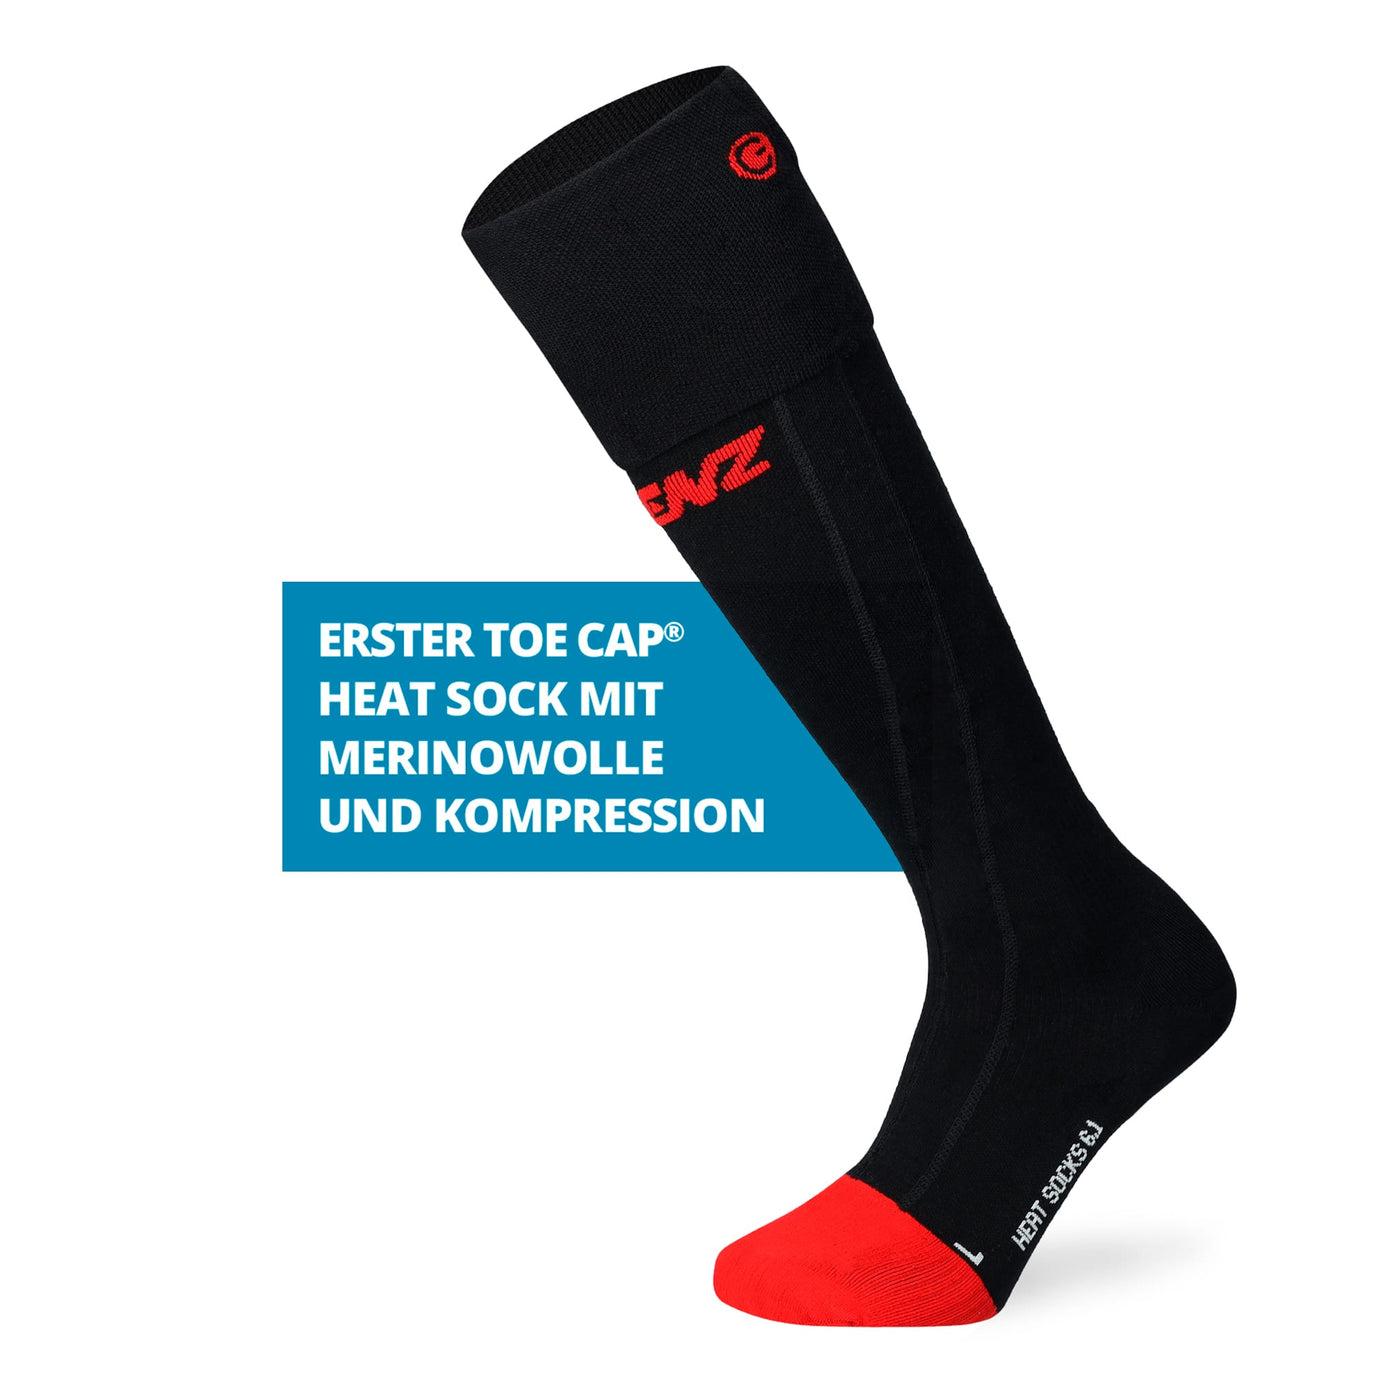 LENZ-HEAT SOCK 6.1 TOE CAP COMPRESSION BLACK/RED - Chaussette chauffante